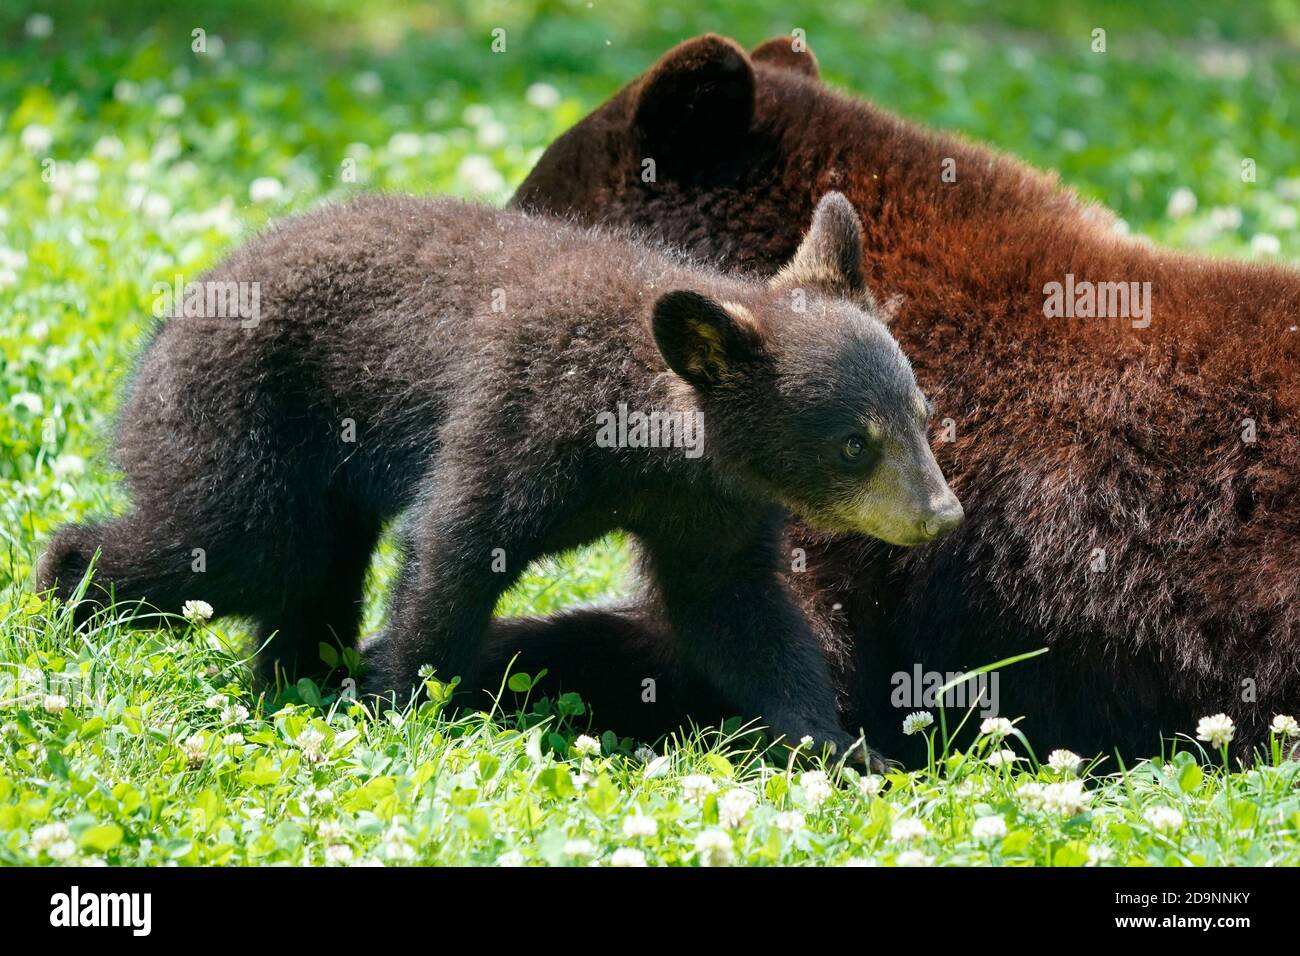 Black bear (Ursus americanus), mother with cub, France Stock Photo